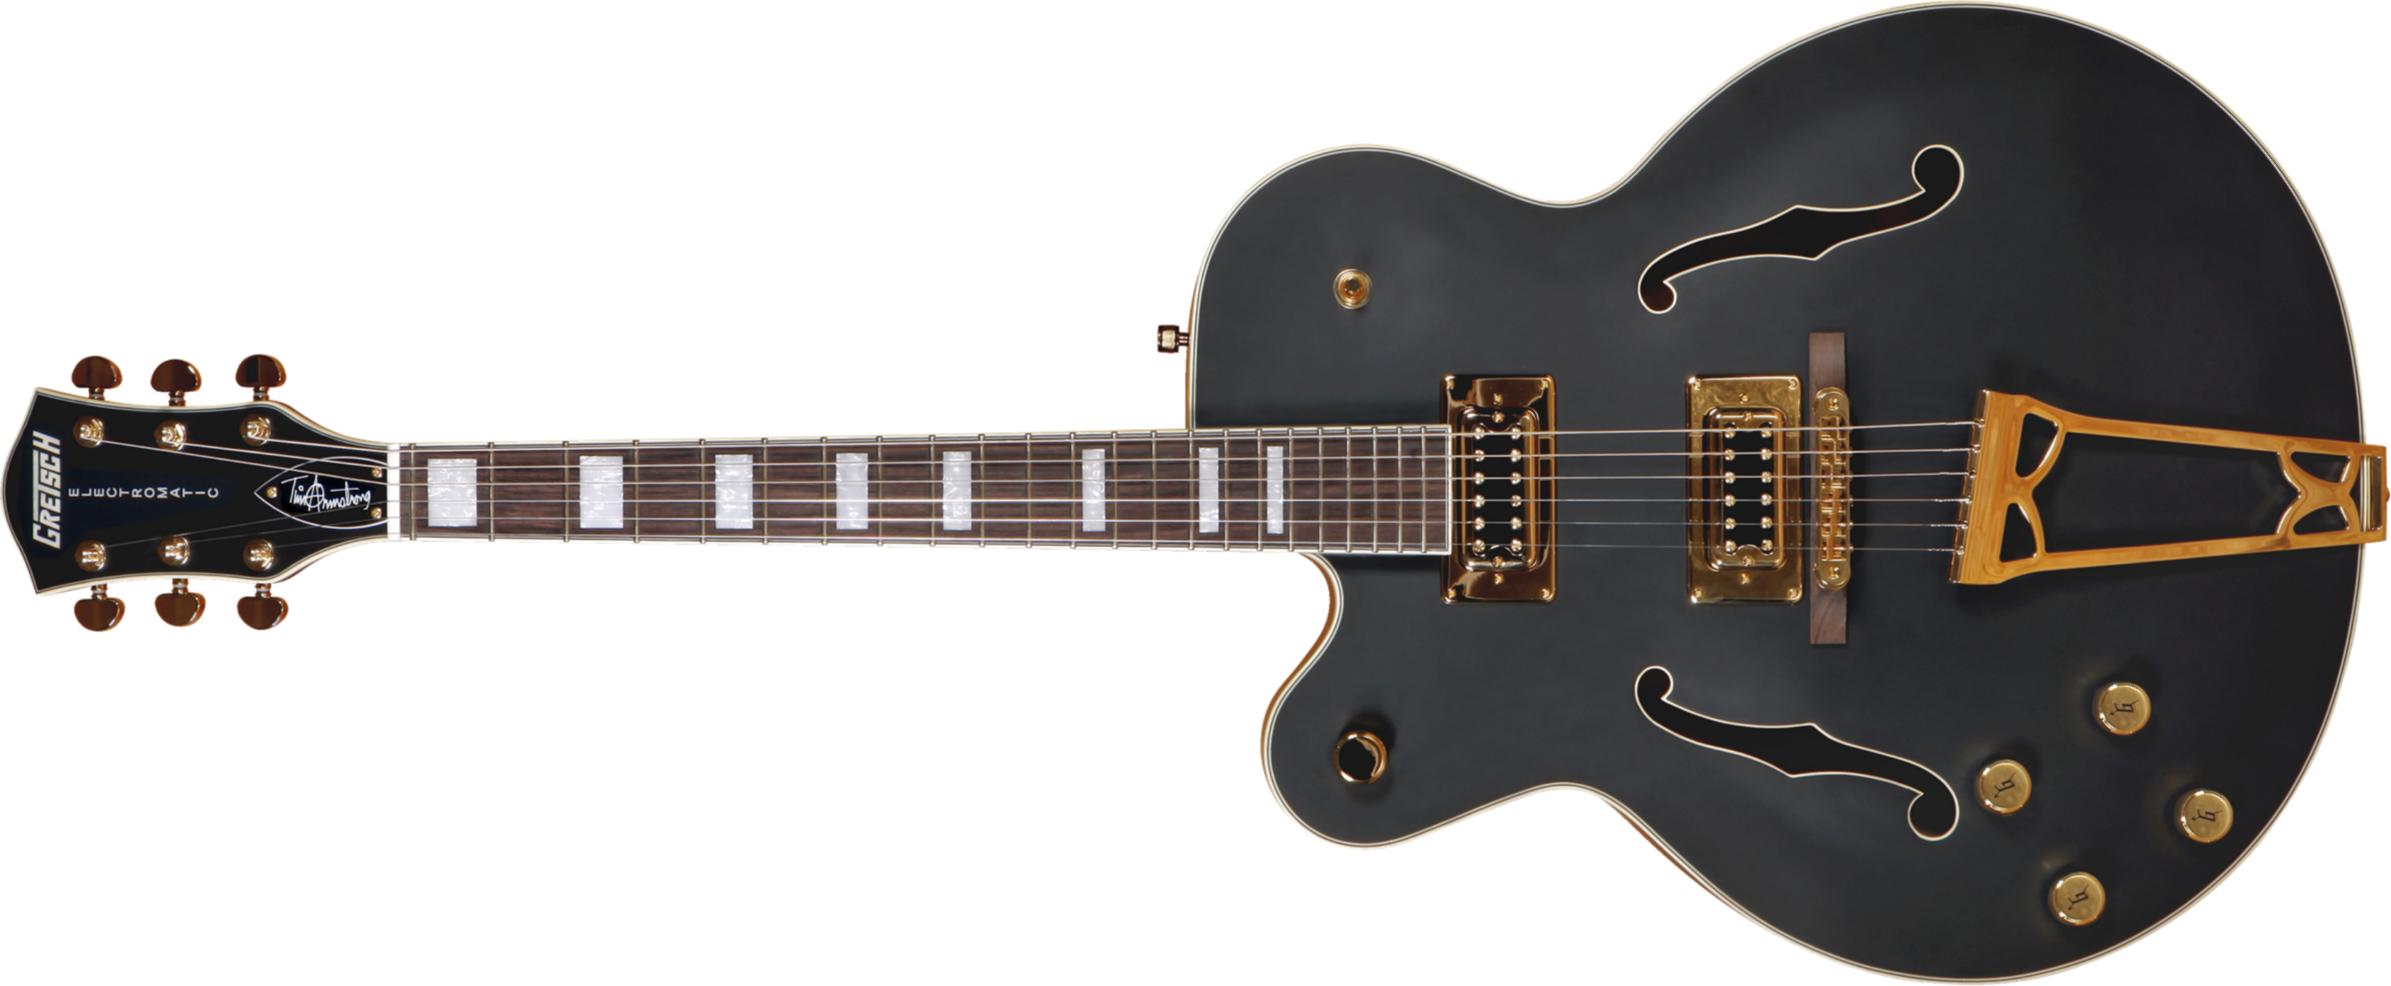 Gretsch Tim Armstrong G5191bk Electromatic Hollow Body Left-handed - Black Matte - Guitarra electrica para zurdos - Main picture